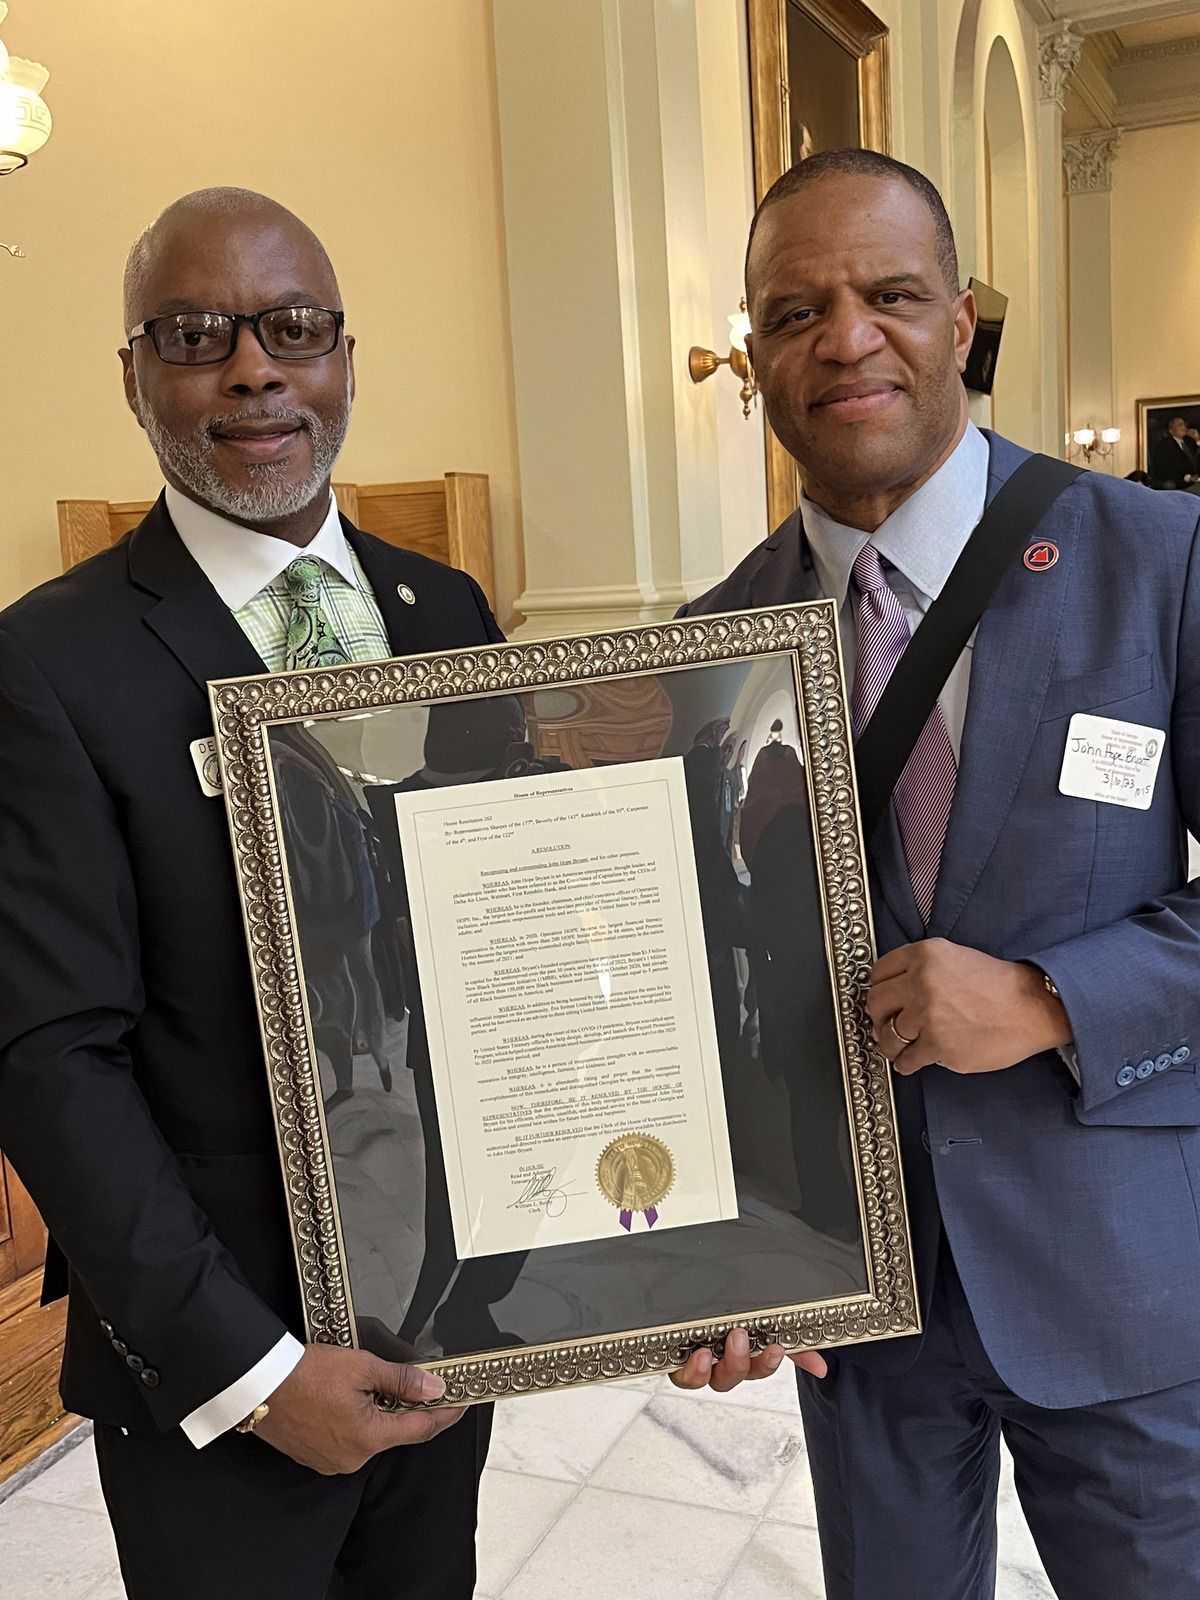 Georgia State Representative Dexter Sharper and John Hope are holding a framed certificate .